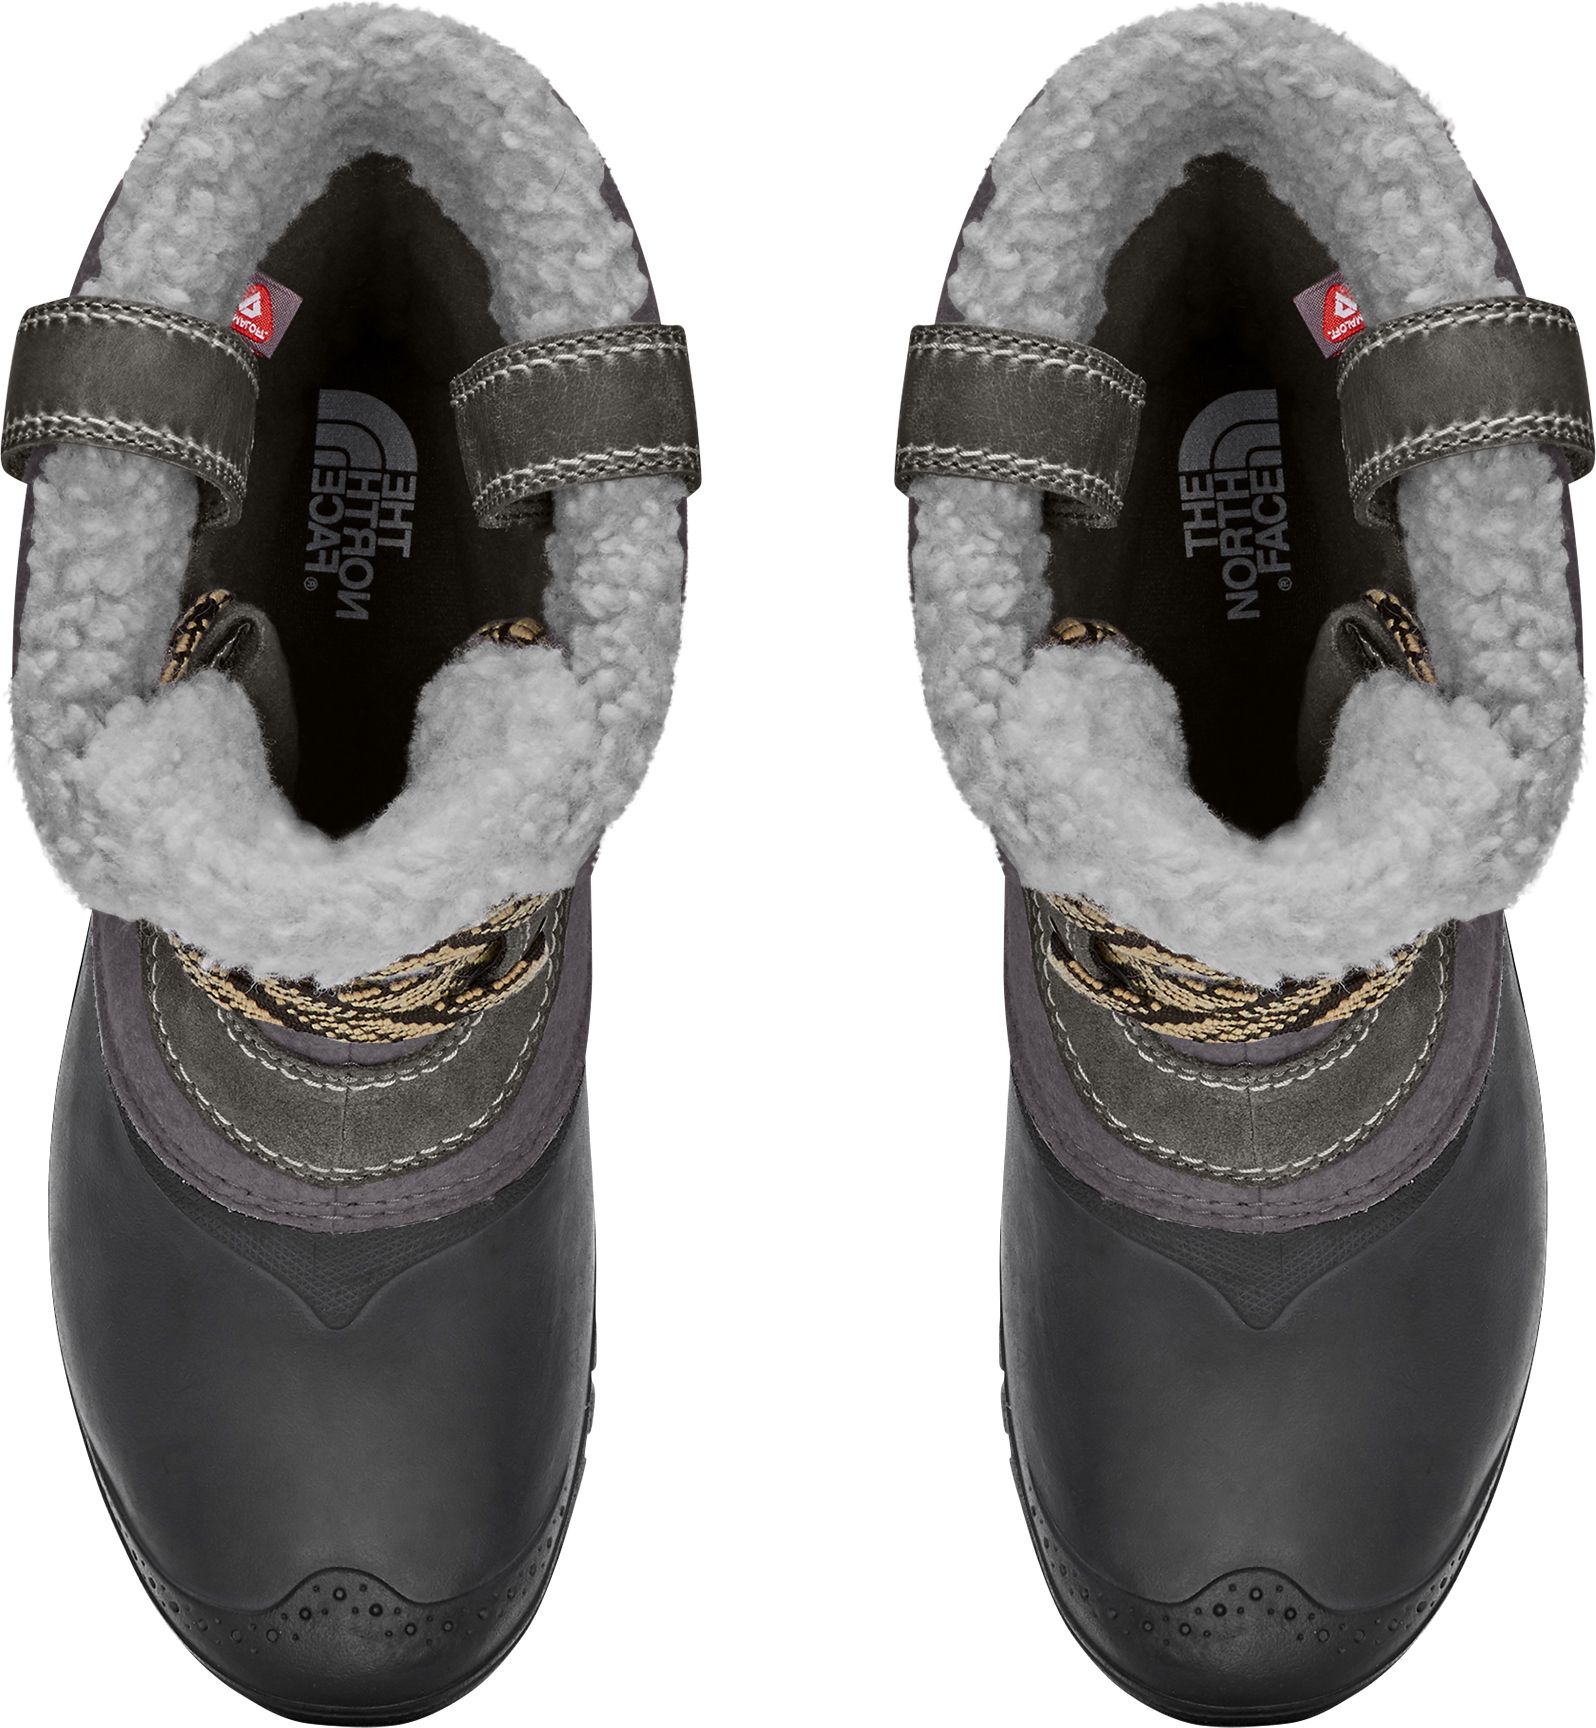 the north face women's shellista iii tall 200g waterproof winter boots